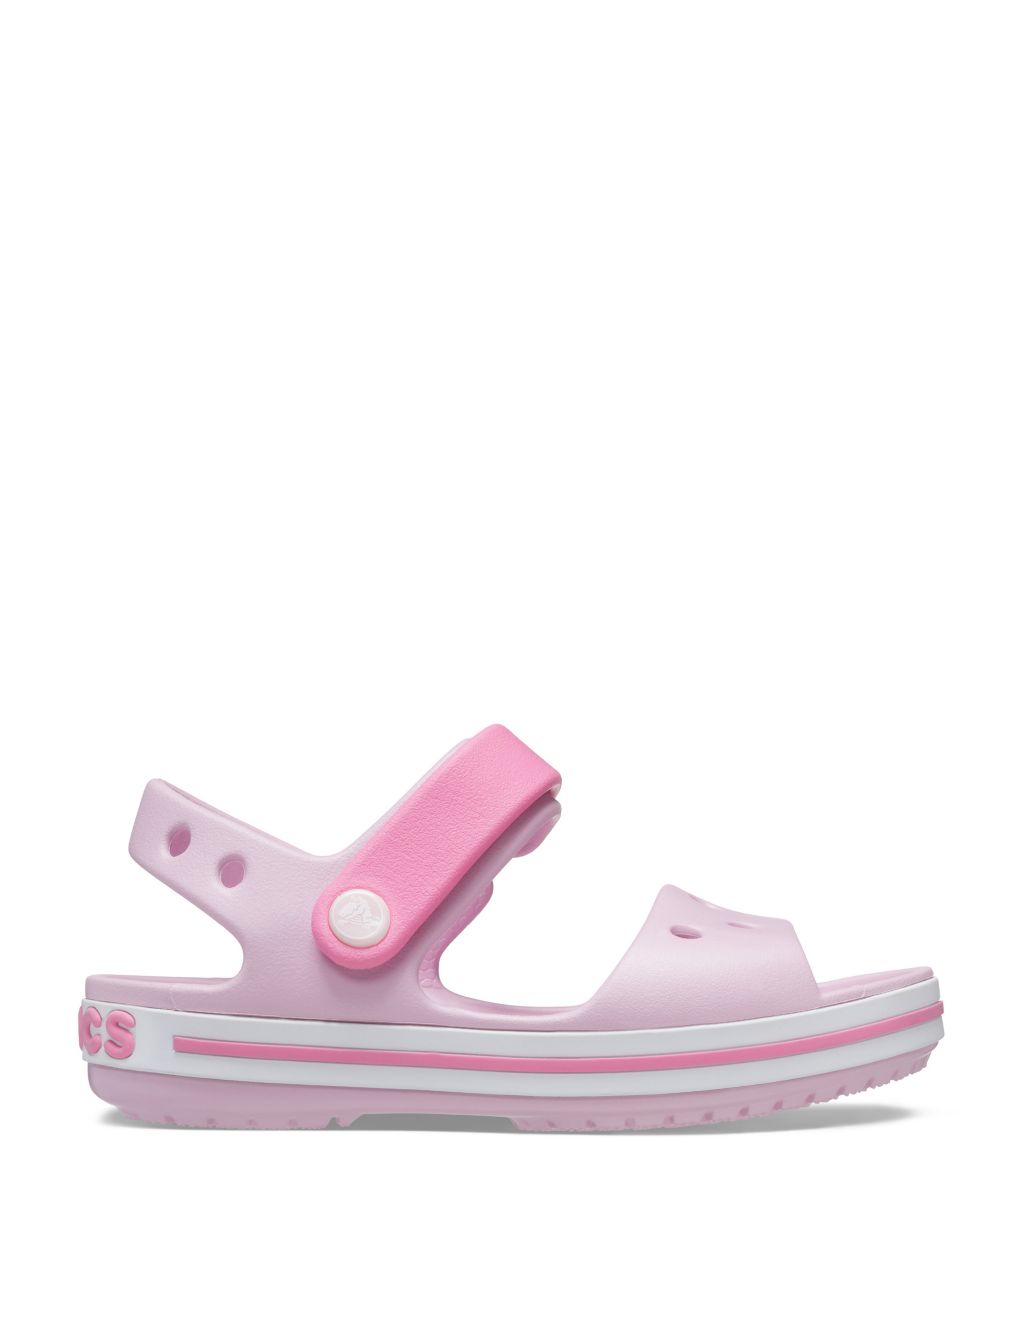 Kids' Crocband™ Riptape Sandals (4 Small - 3 Large) image 1